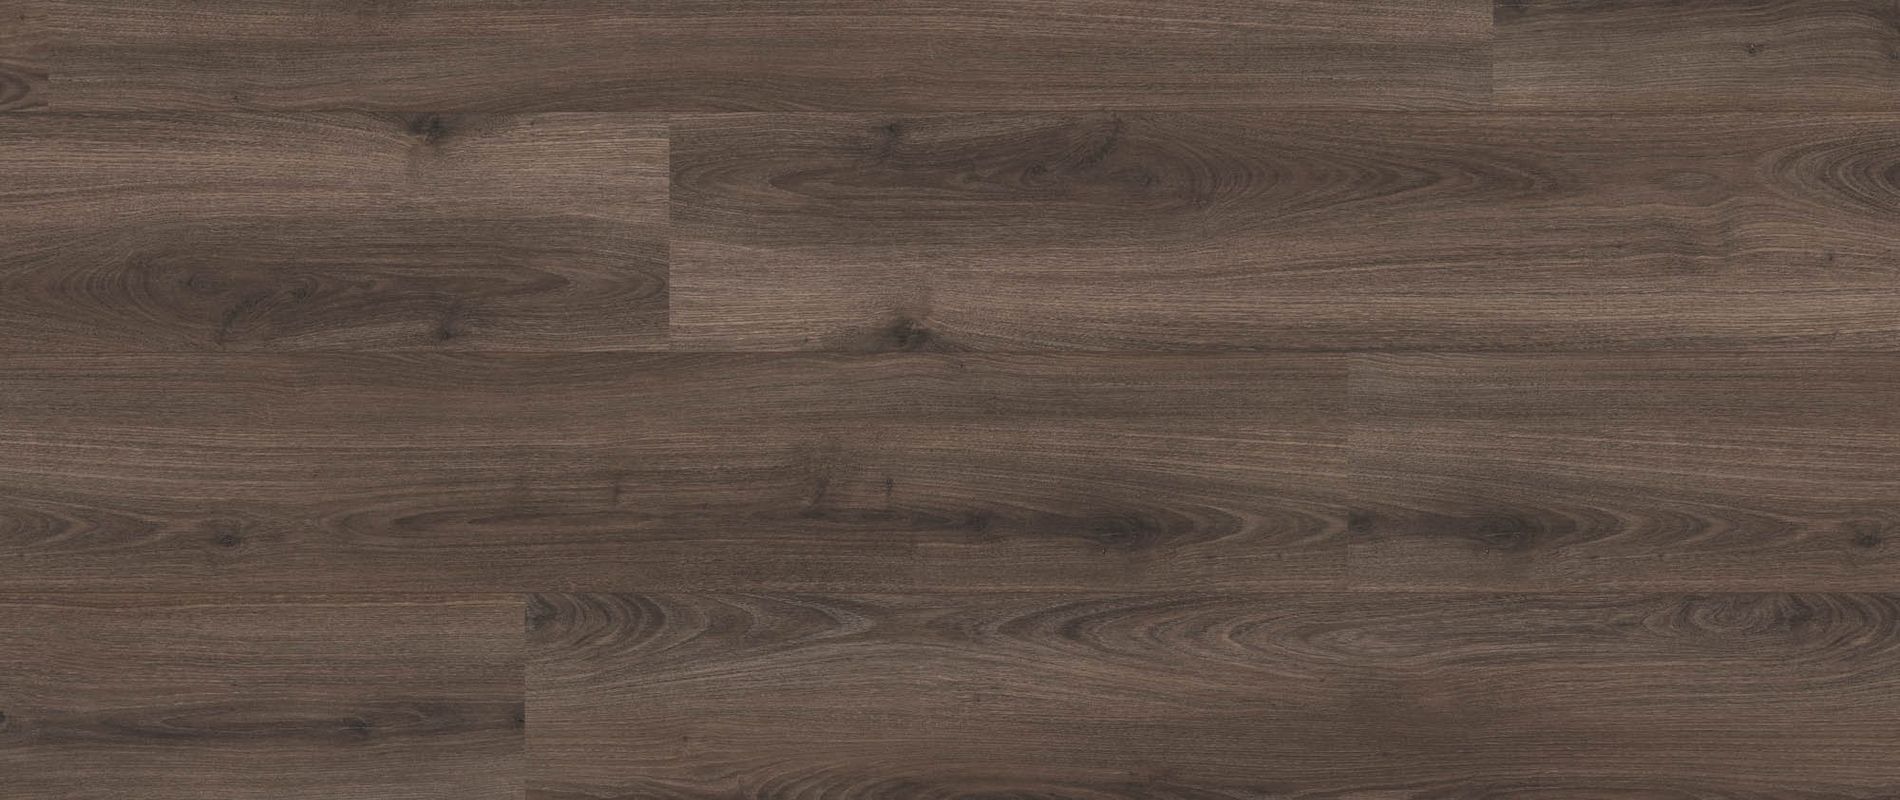 wineo Pureline Bioboden 1500 wood XL Art. PL086C Royal Chestnut Mocca 2,5 mm